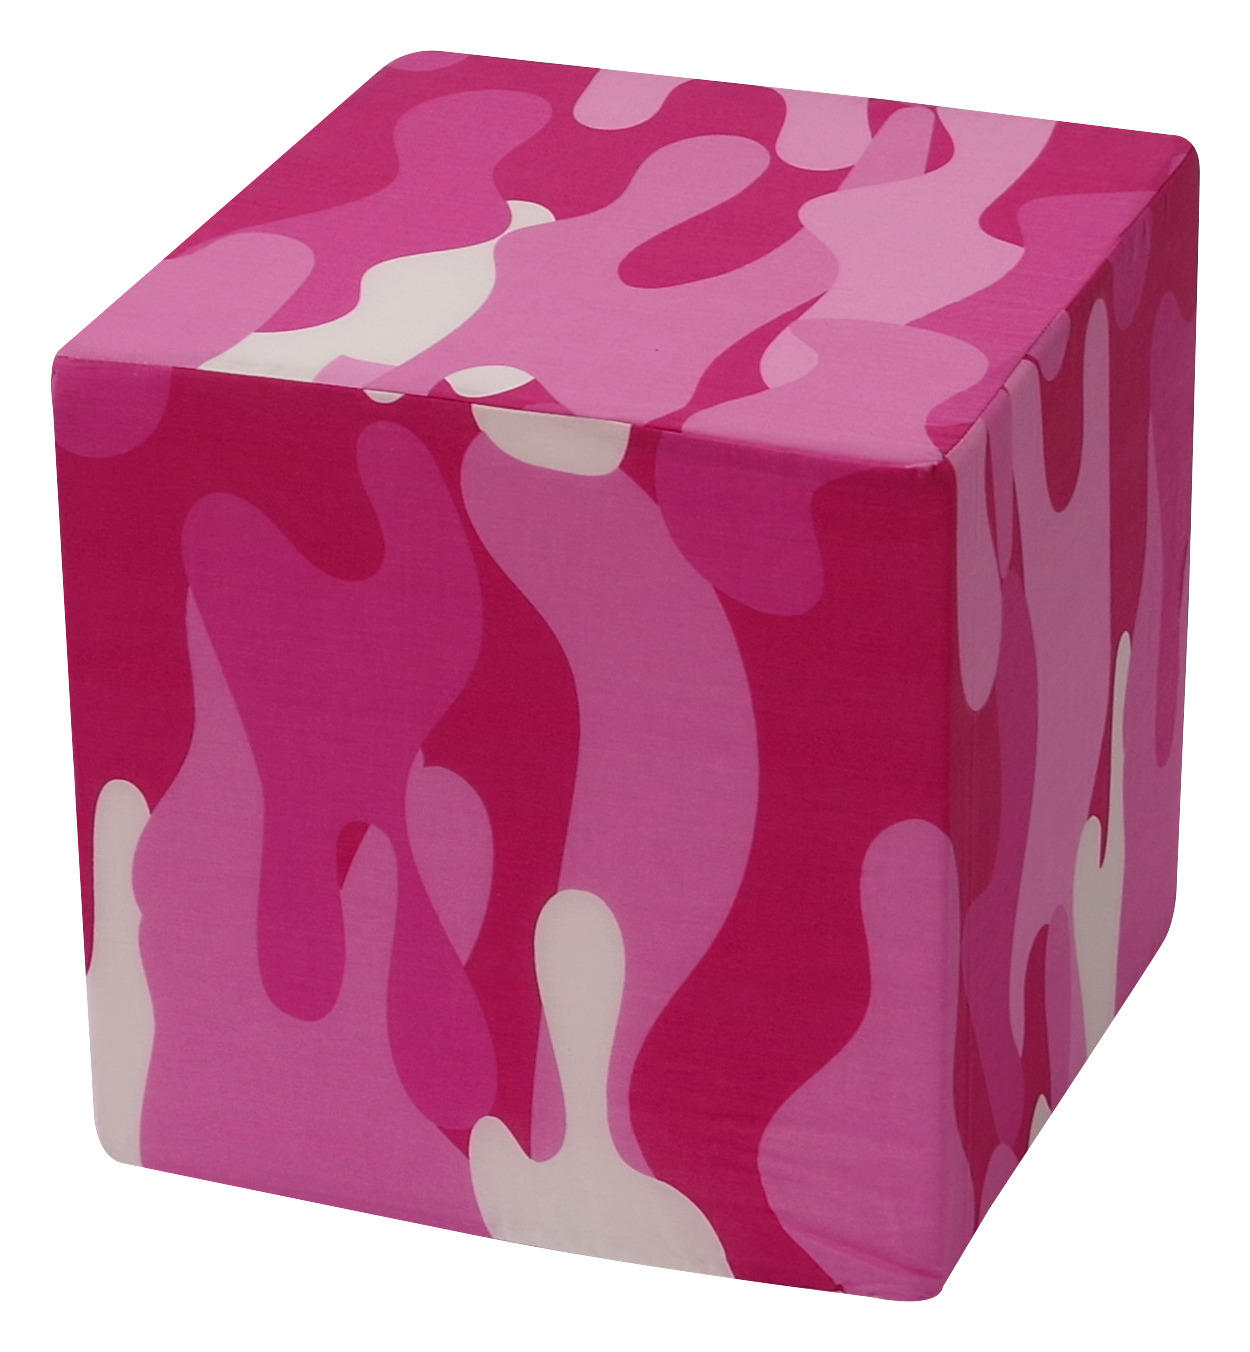 Sitzkissen Hardy pink B/H/T: ca. 40x40x40 cm Hardy - pink (40,00/40,00/40,00cm)